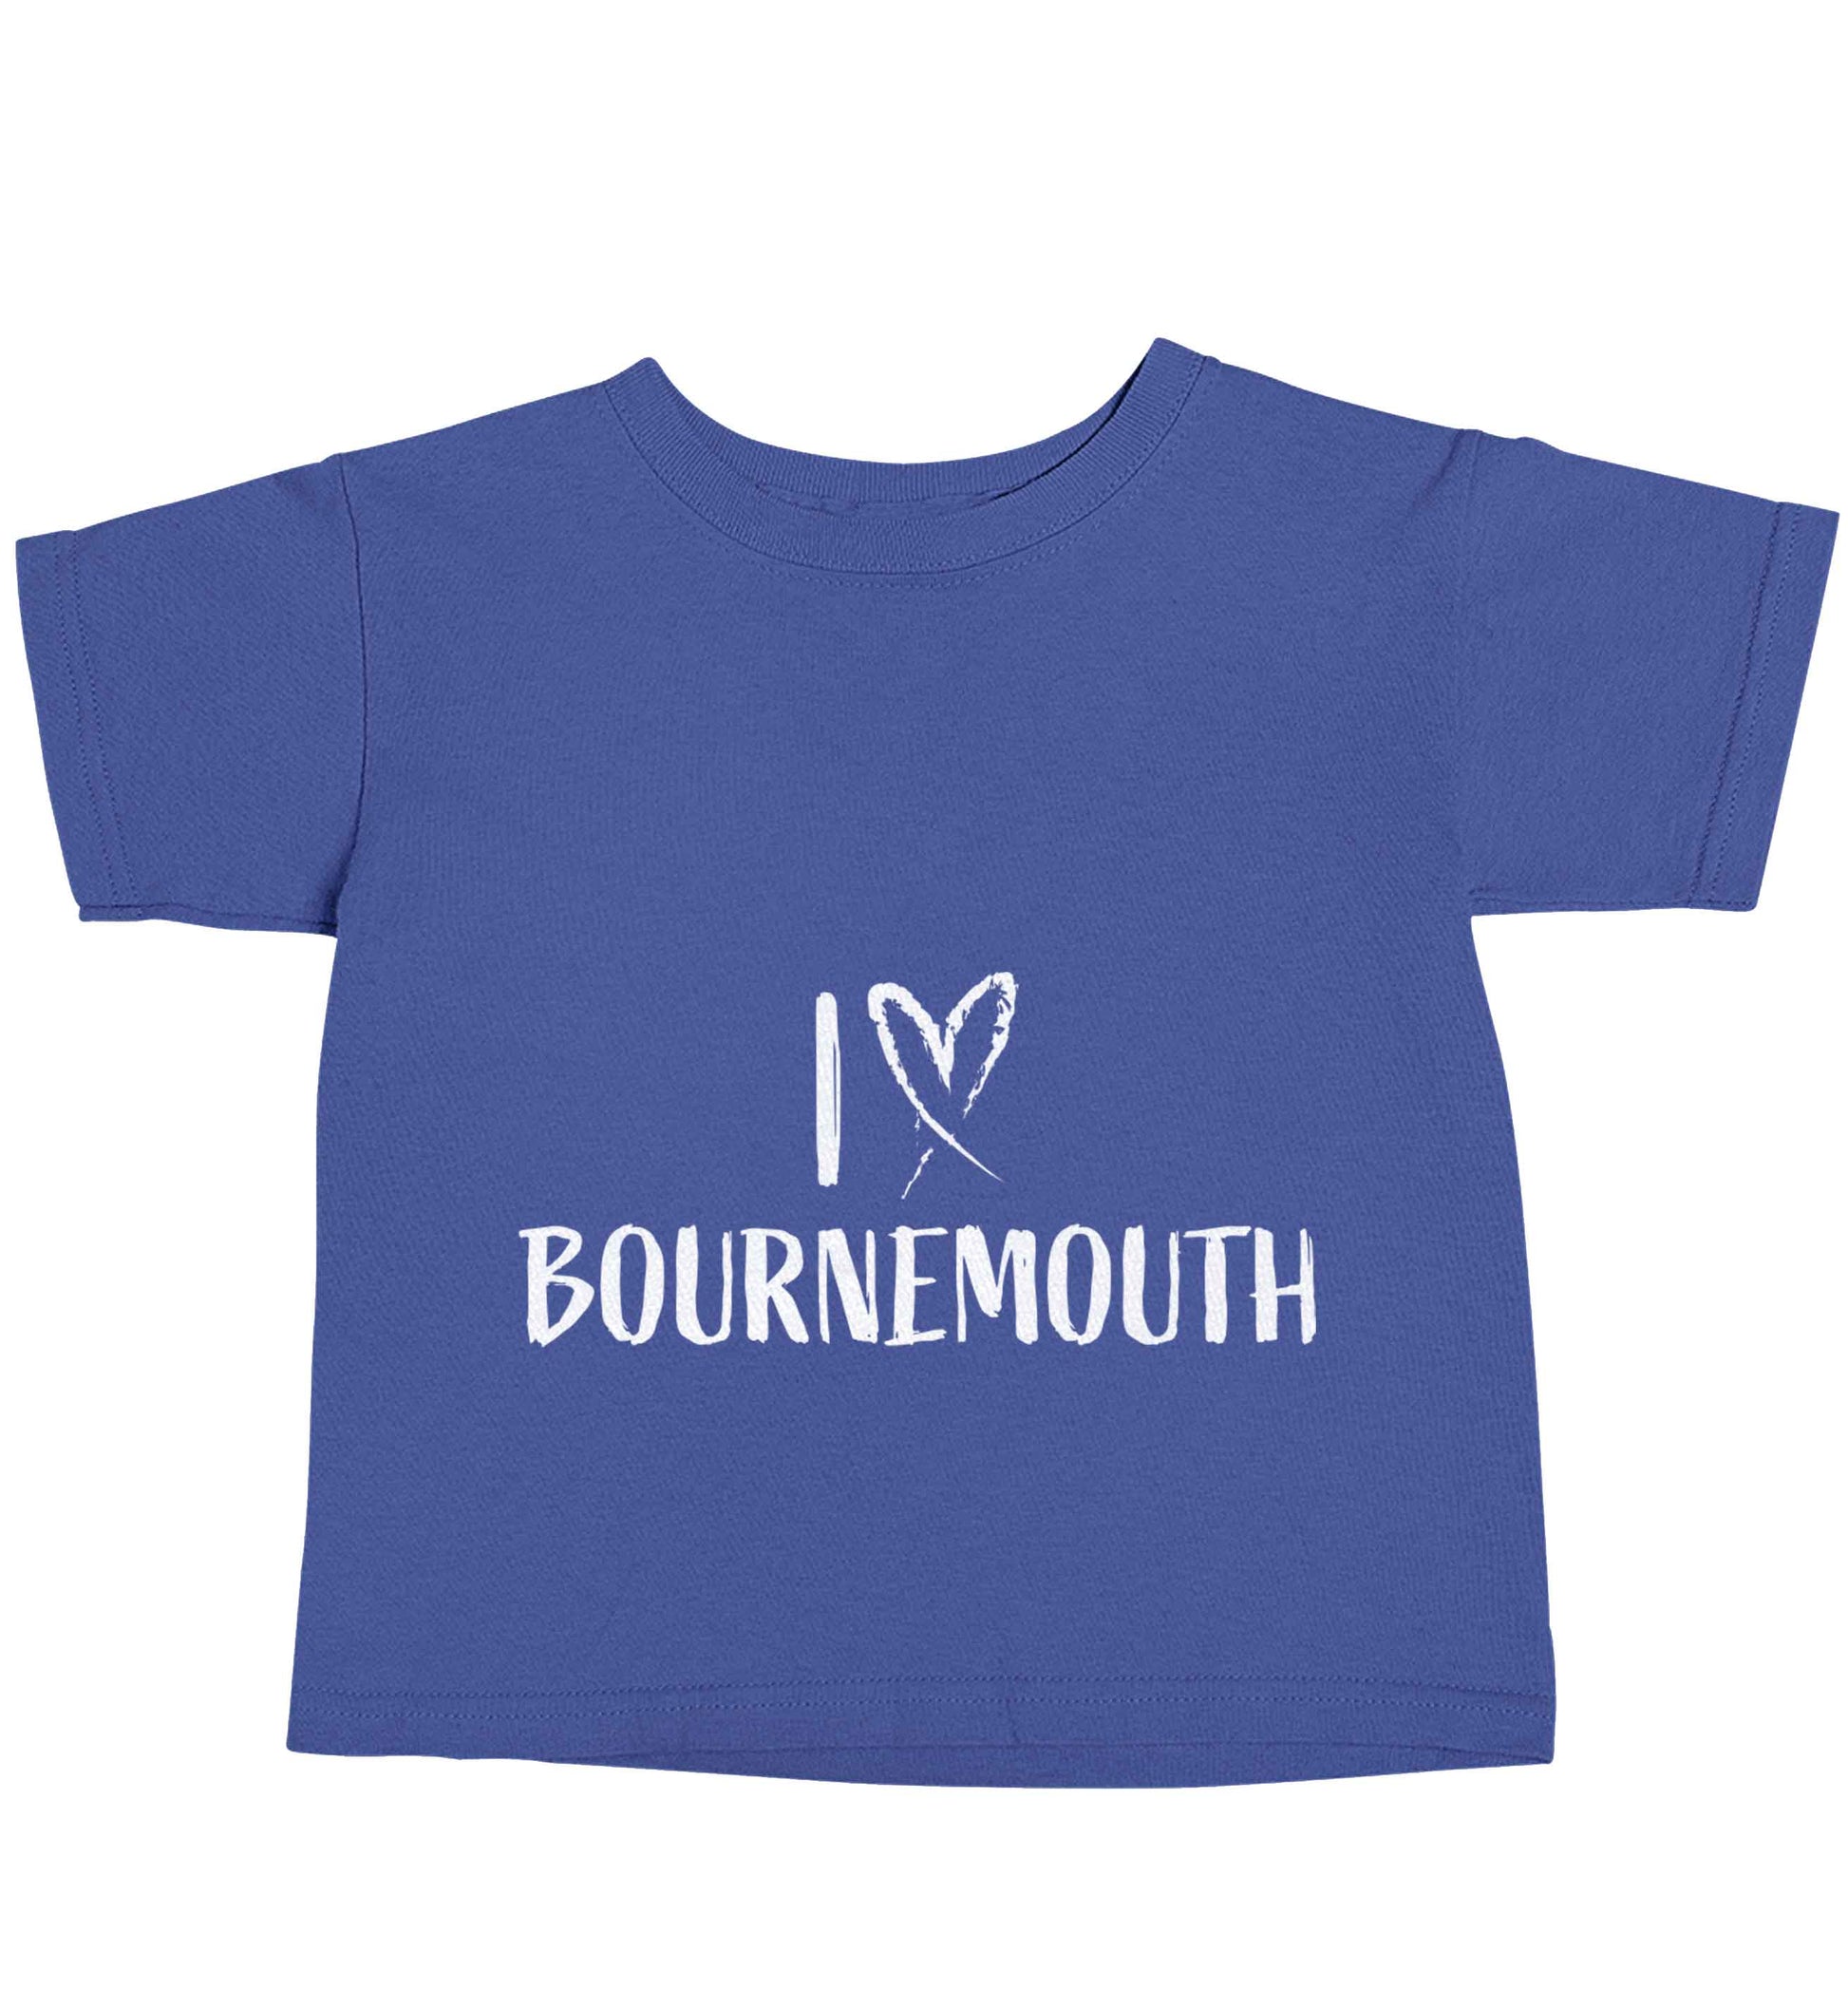 I love Bournemouth blue baby toddler Tshirt 2 Years